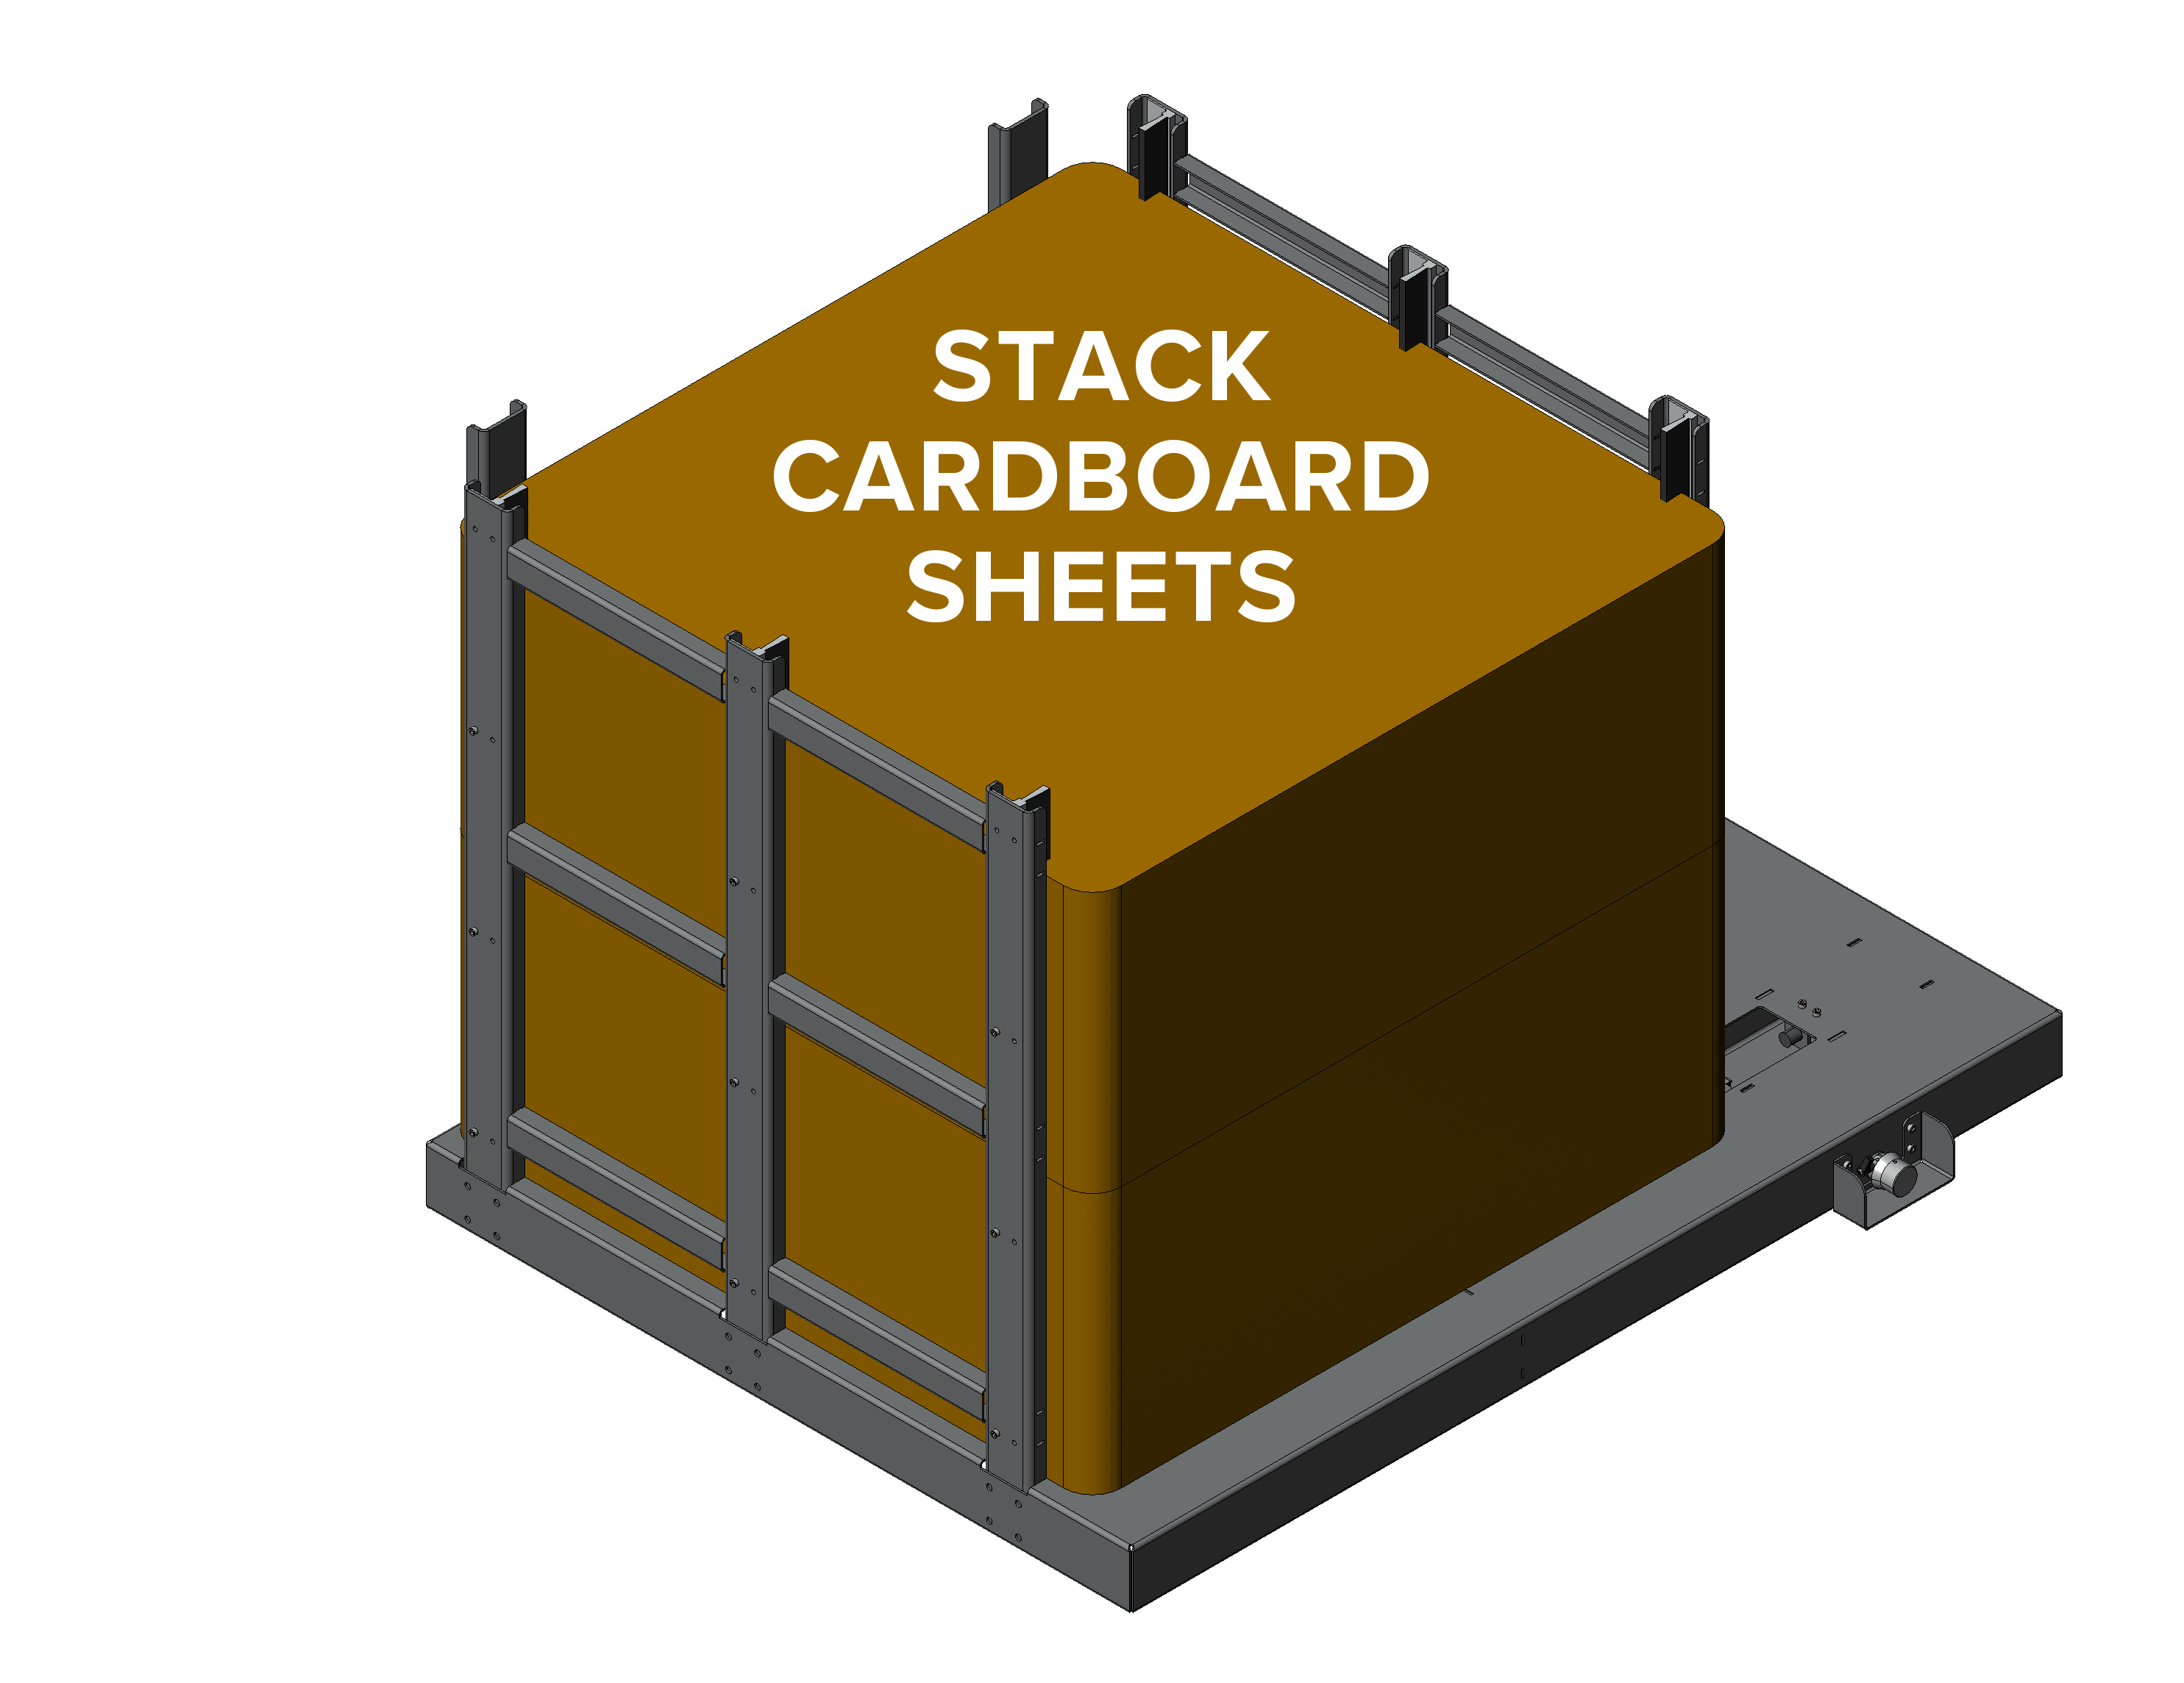 Intermediate sheet station with cardboard sheets